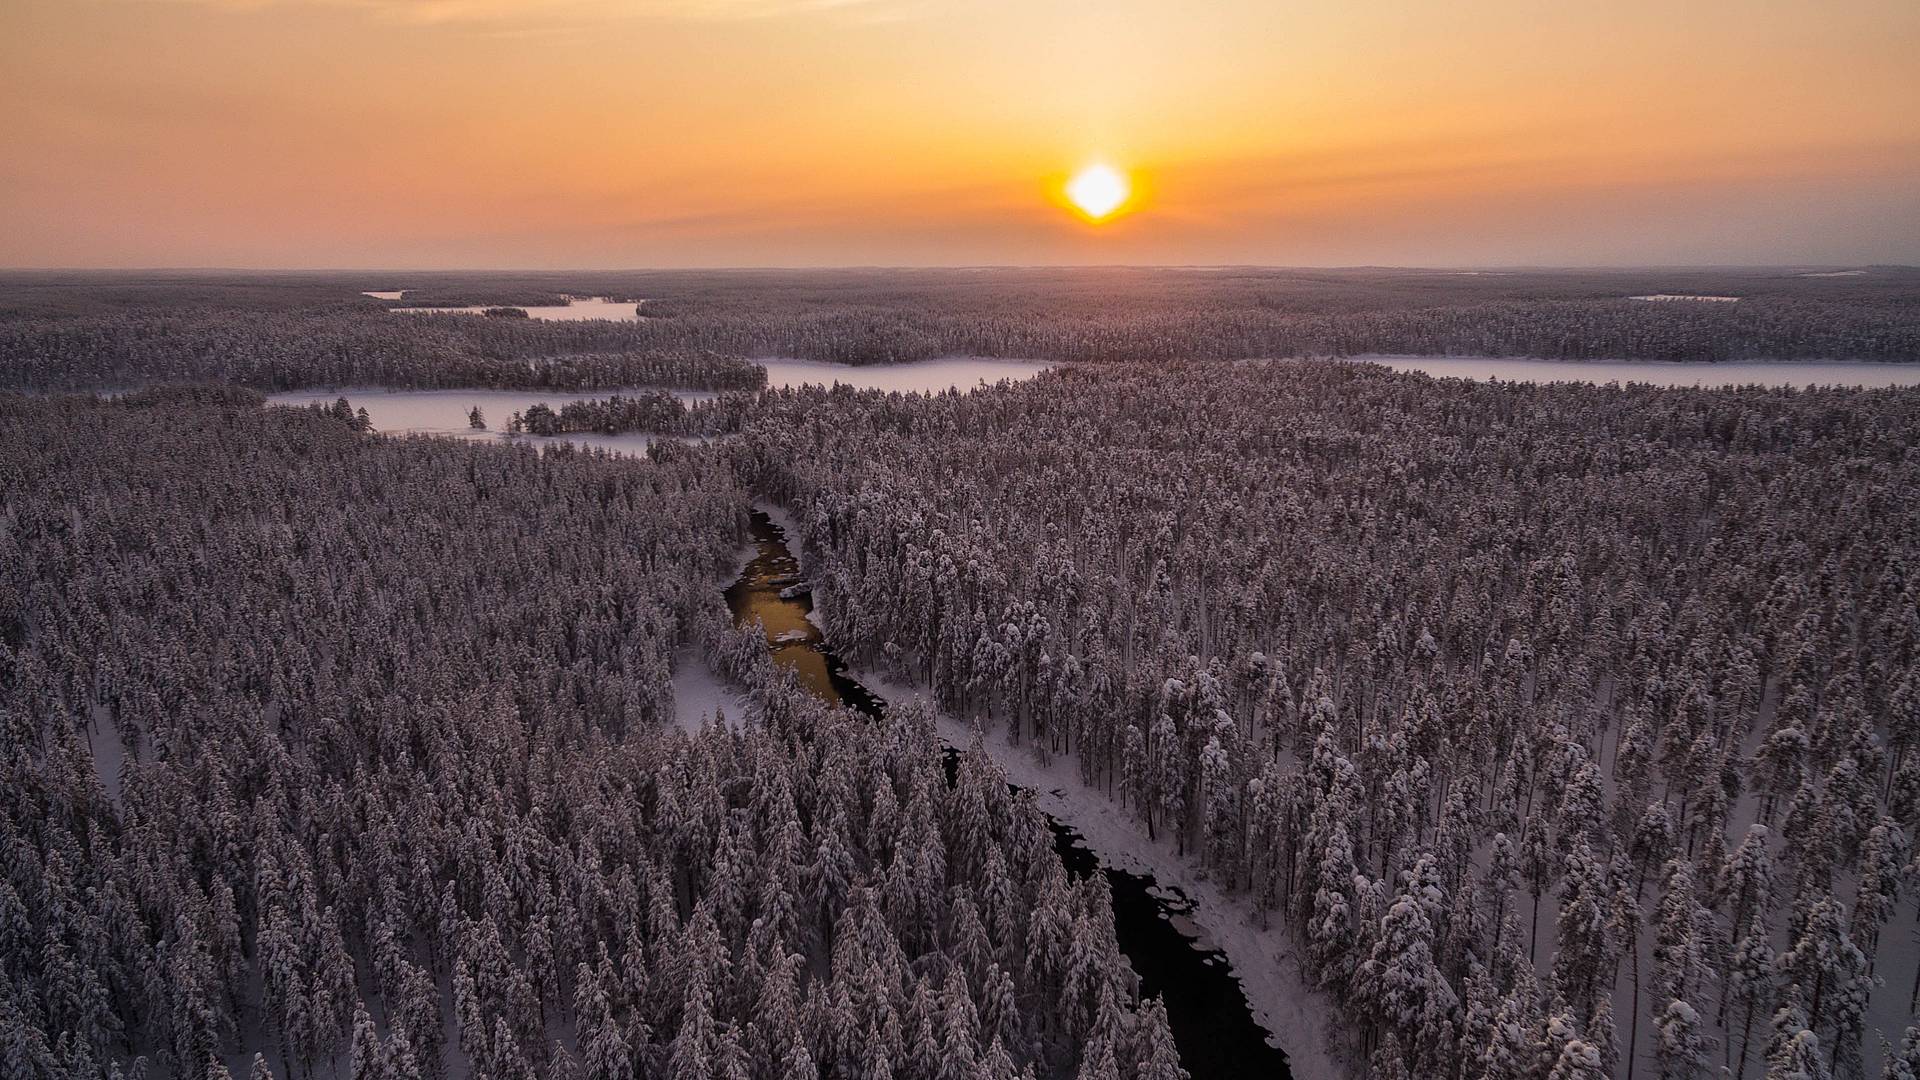 La Finlande grandeur nature, en petit groupe